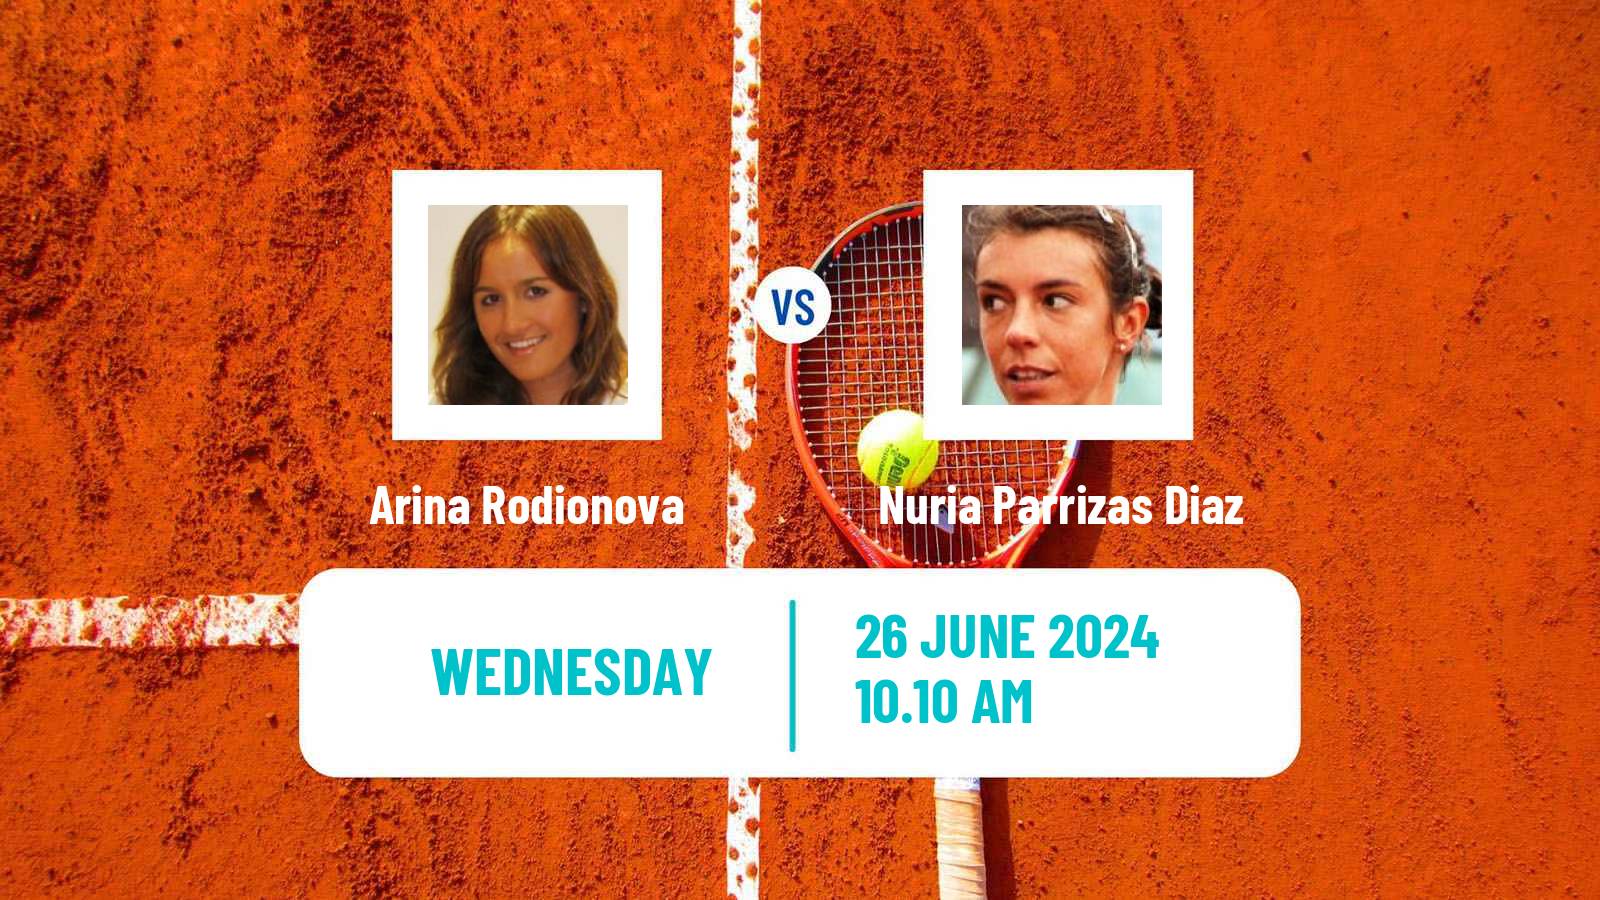 Tennis WTA Wimbledon Arina Rodionova - Nuria Parrizas Diaz